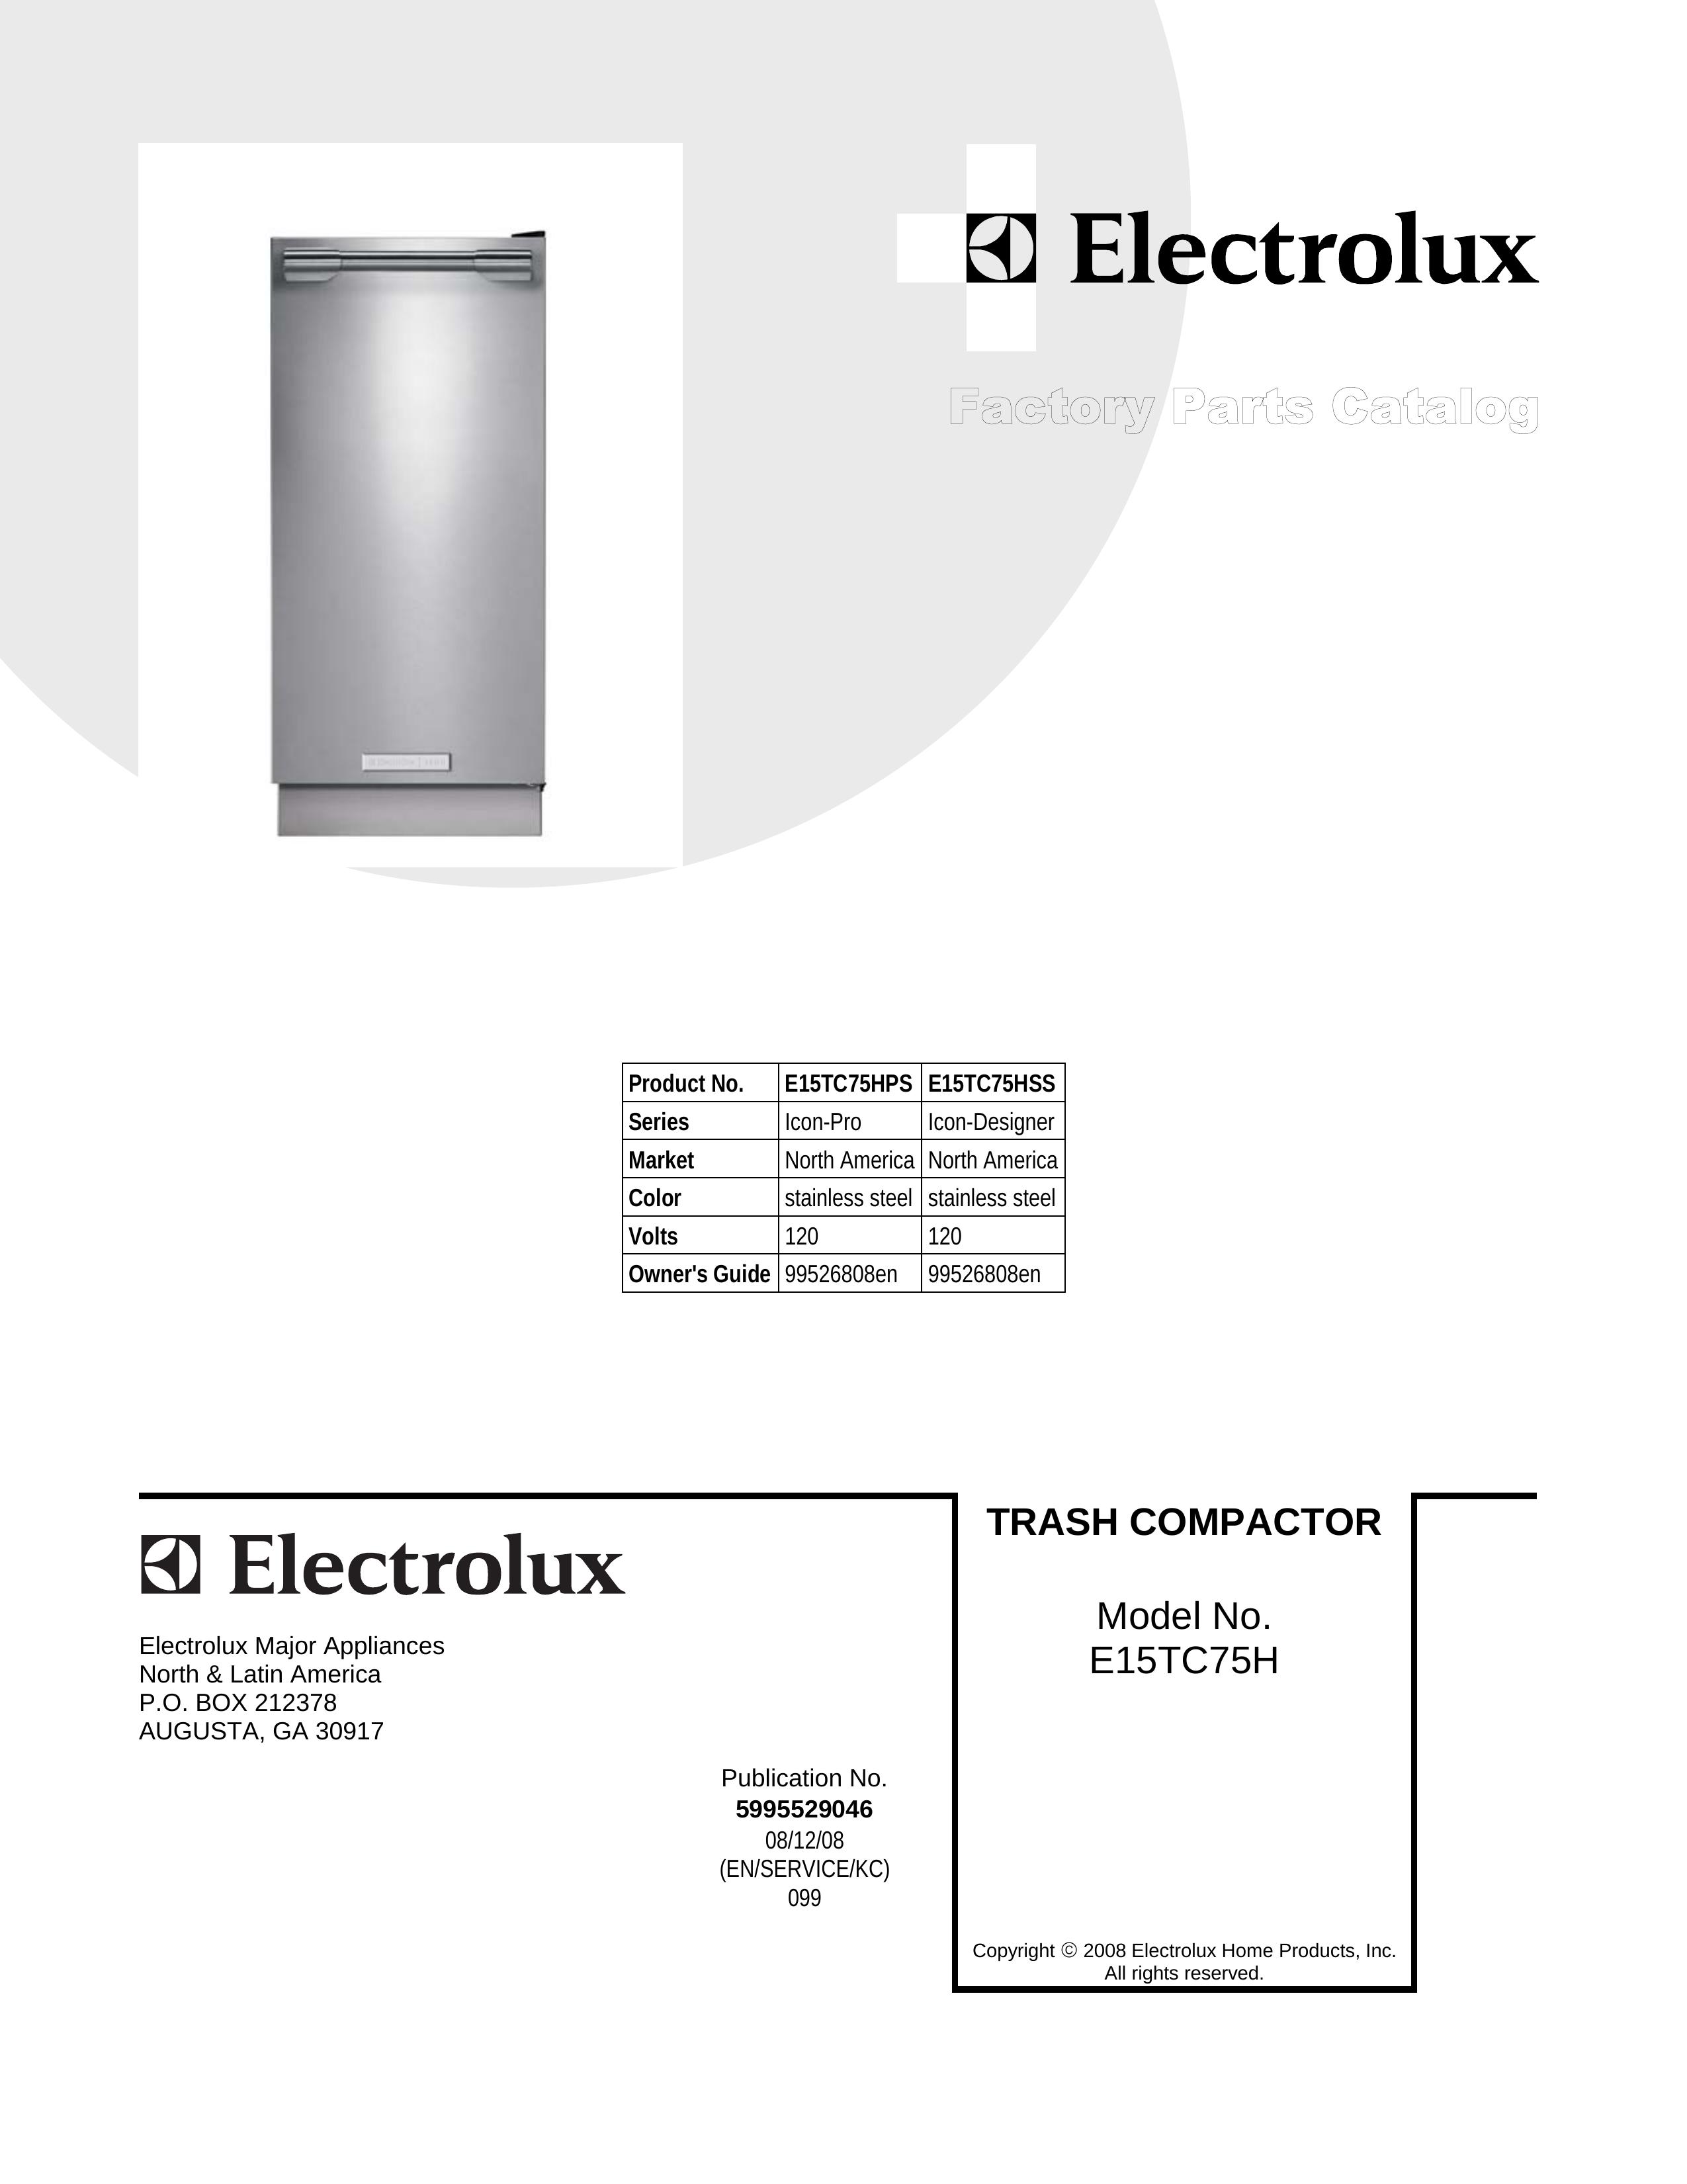 Electrolux E15TC75HP Trash Compactor User Manual